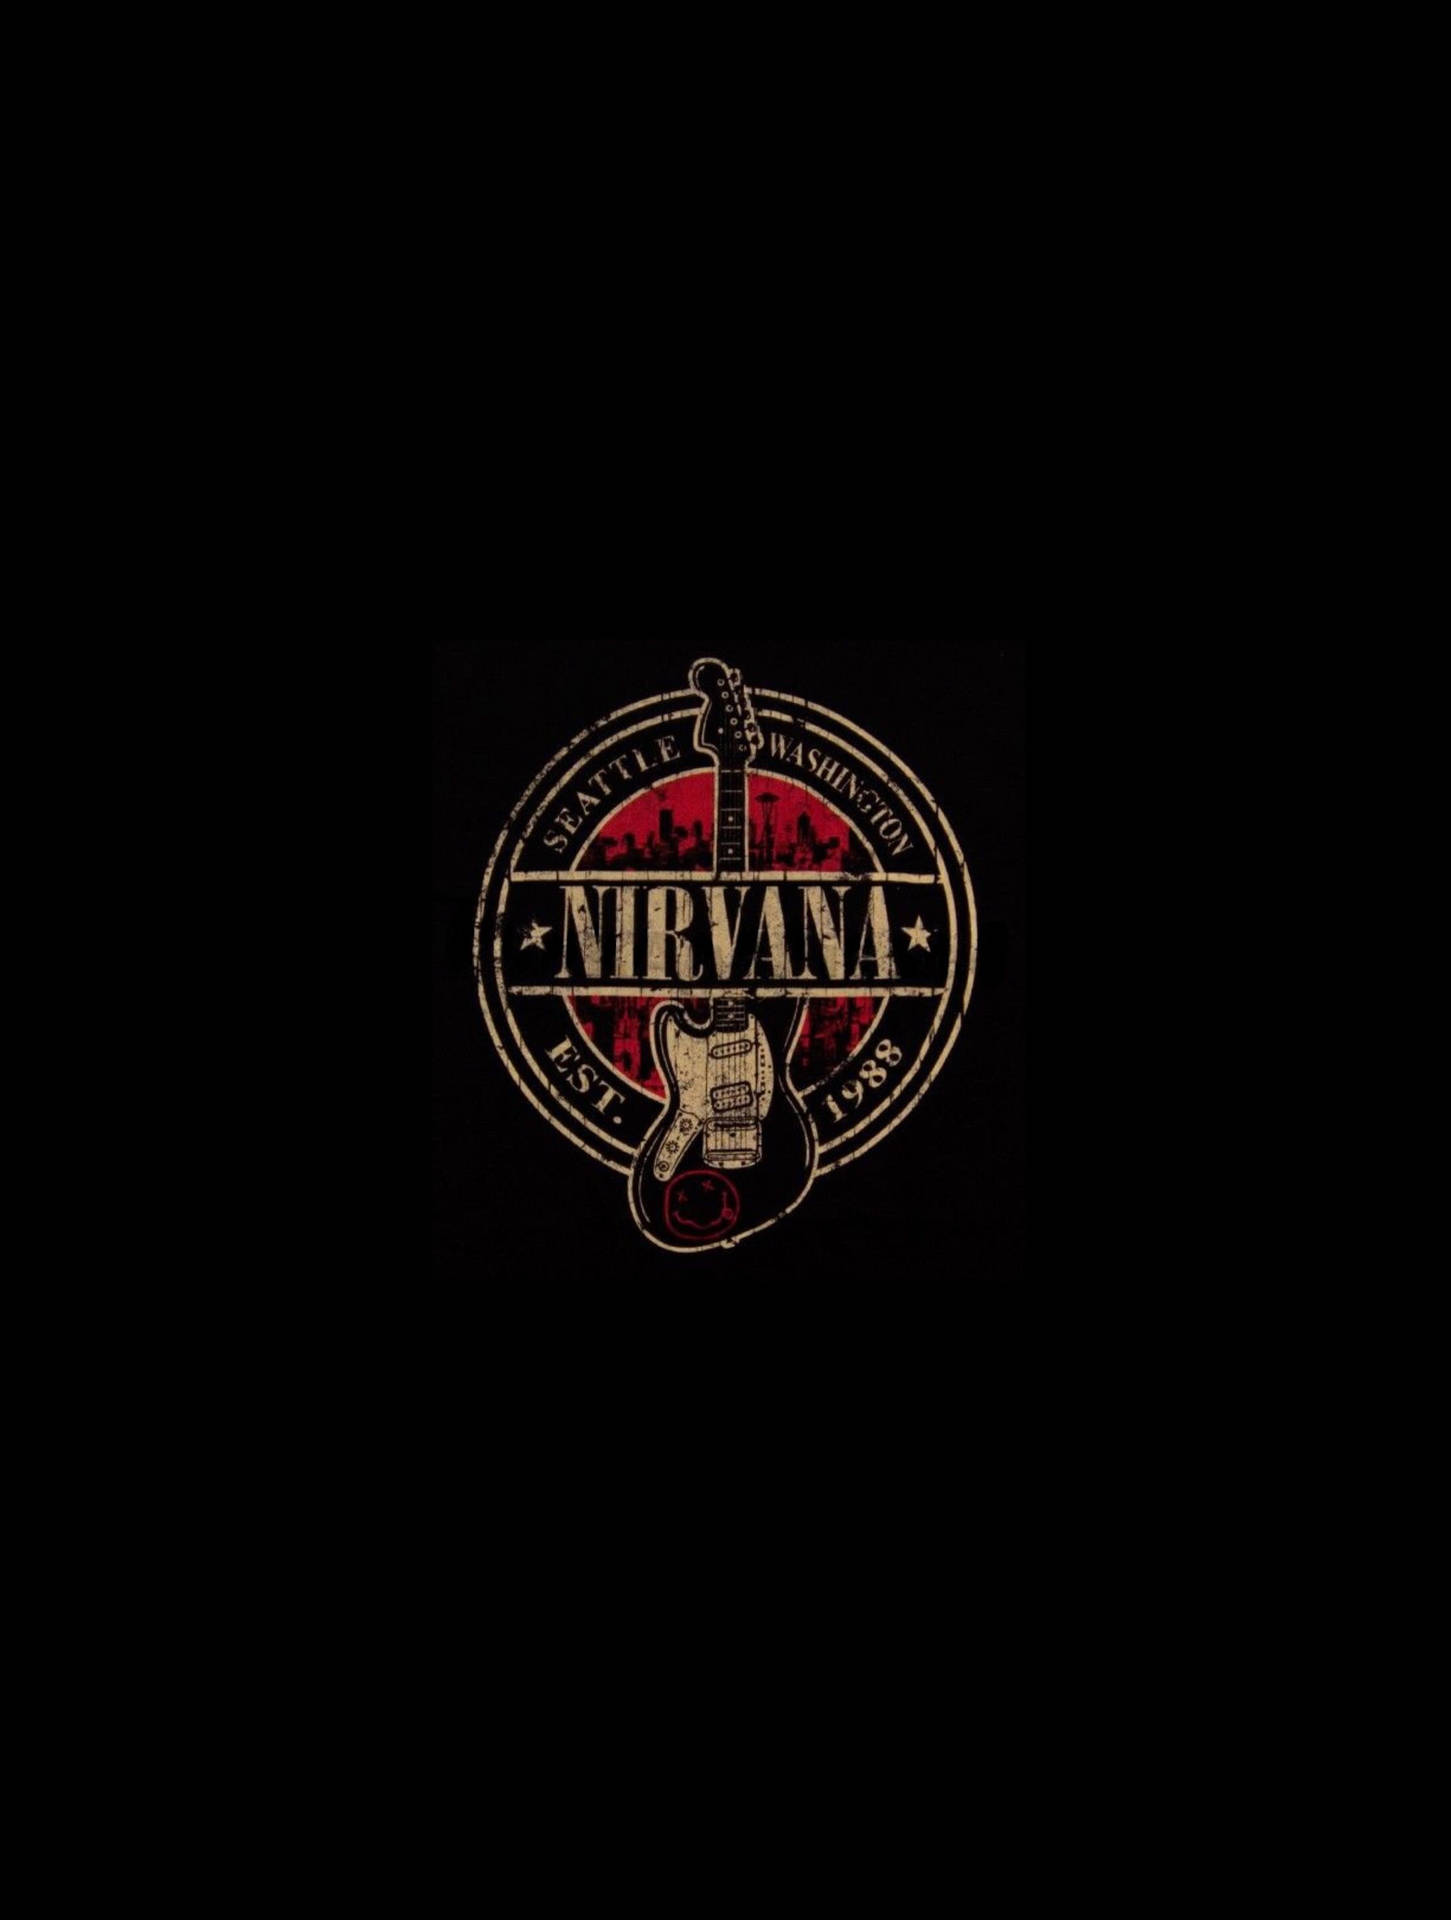 Nirvana band logo on a black background Wallpaper